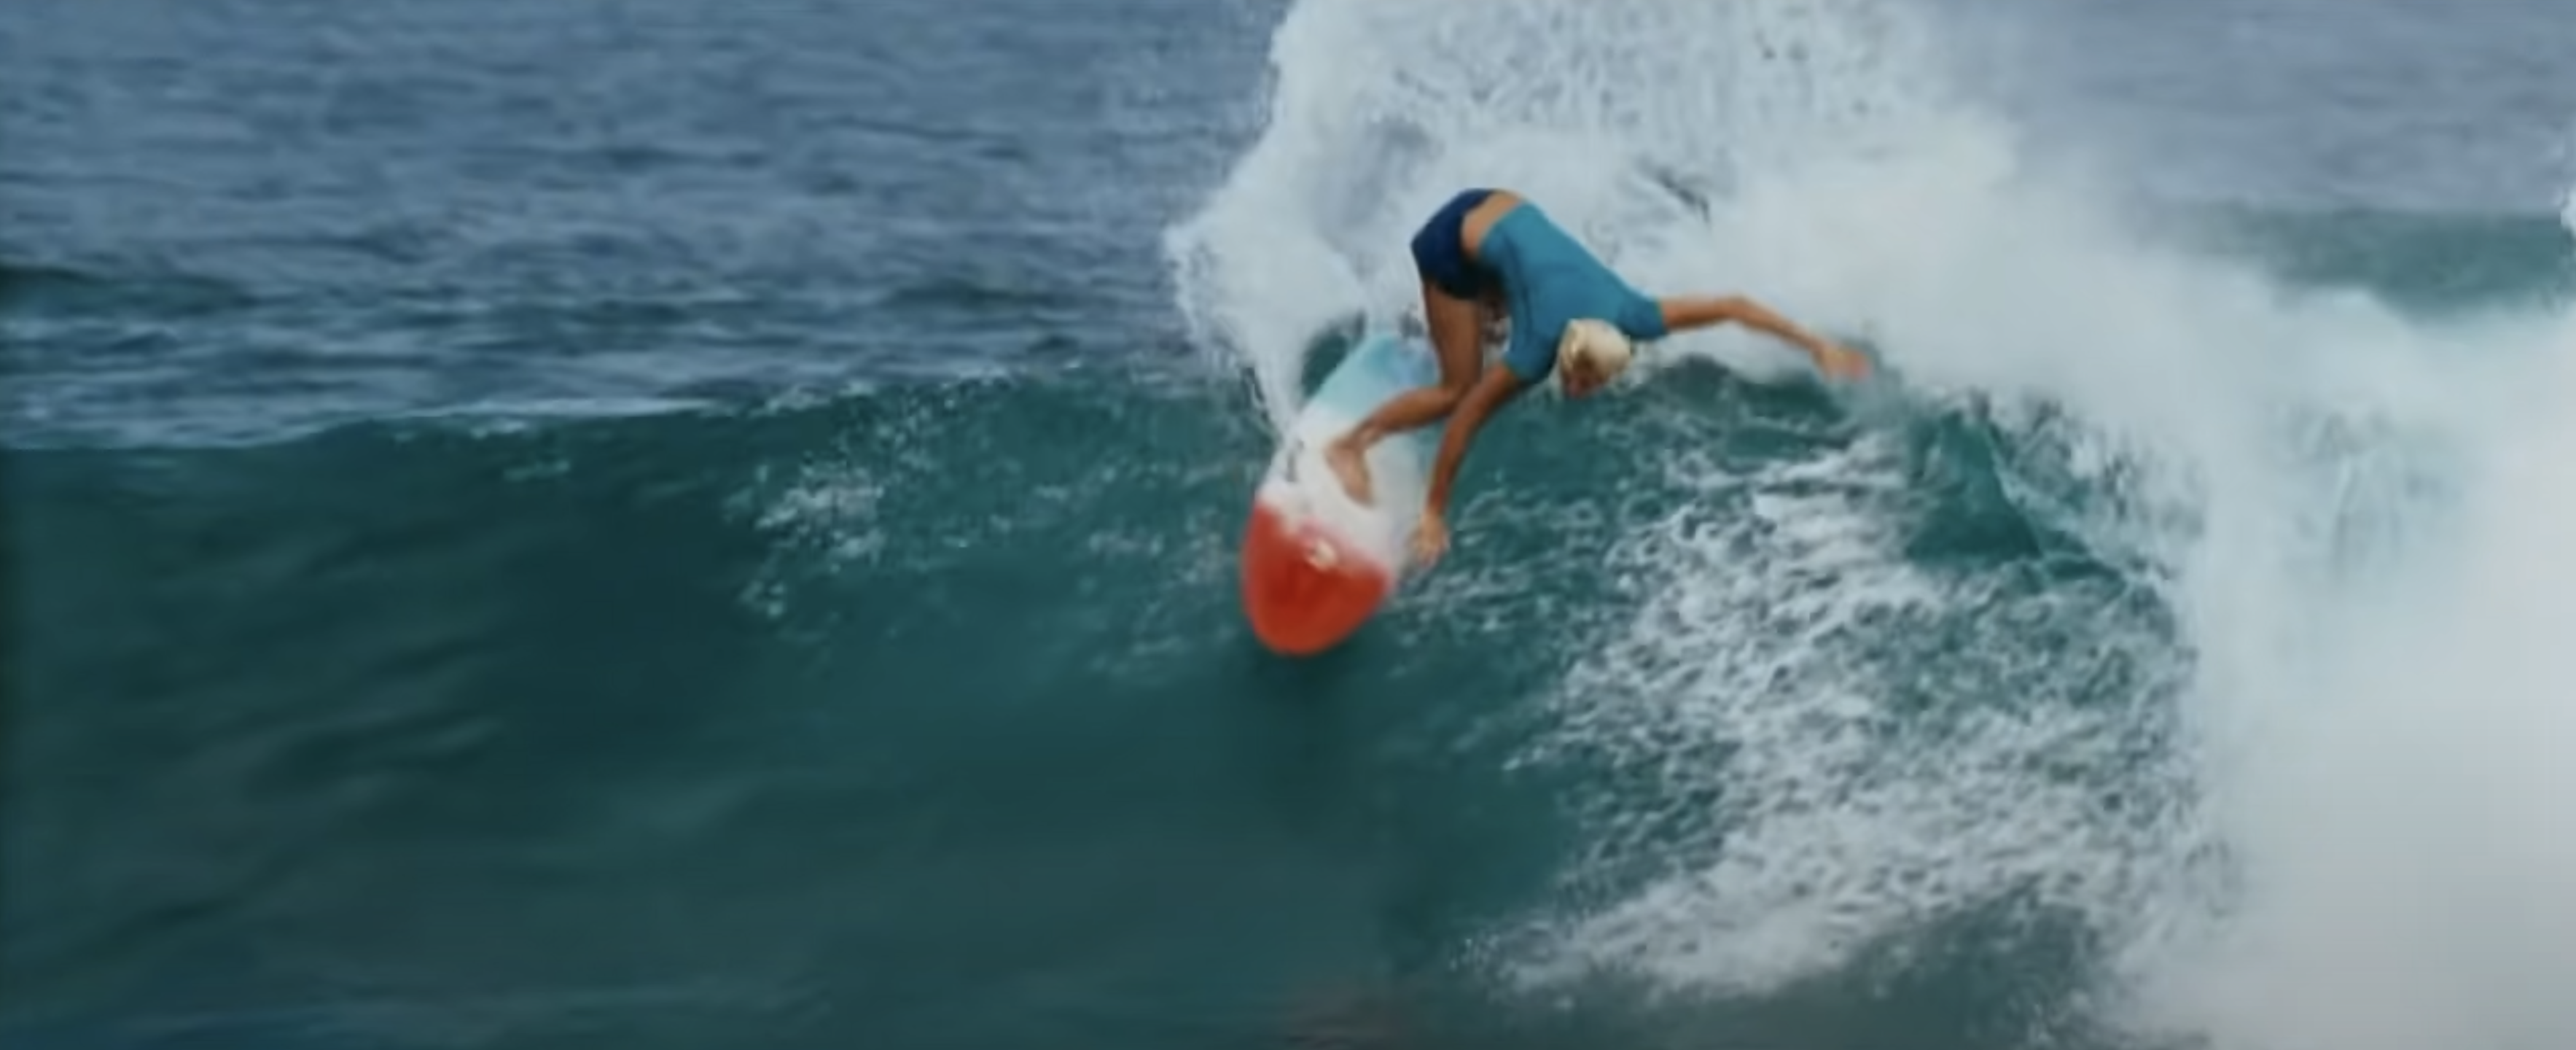 Soul Surfer Official Trailer